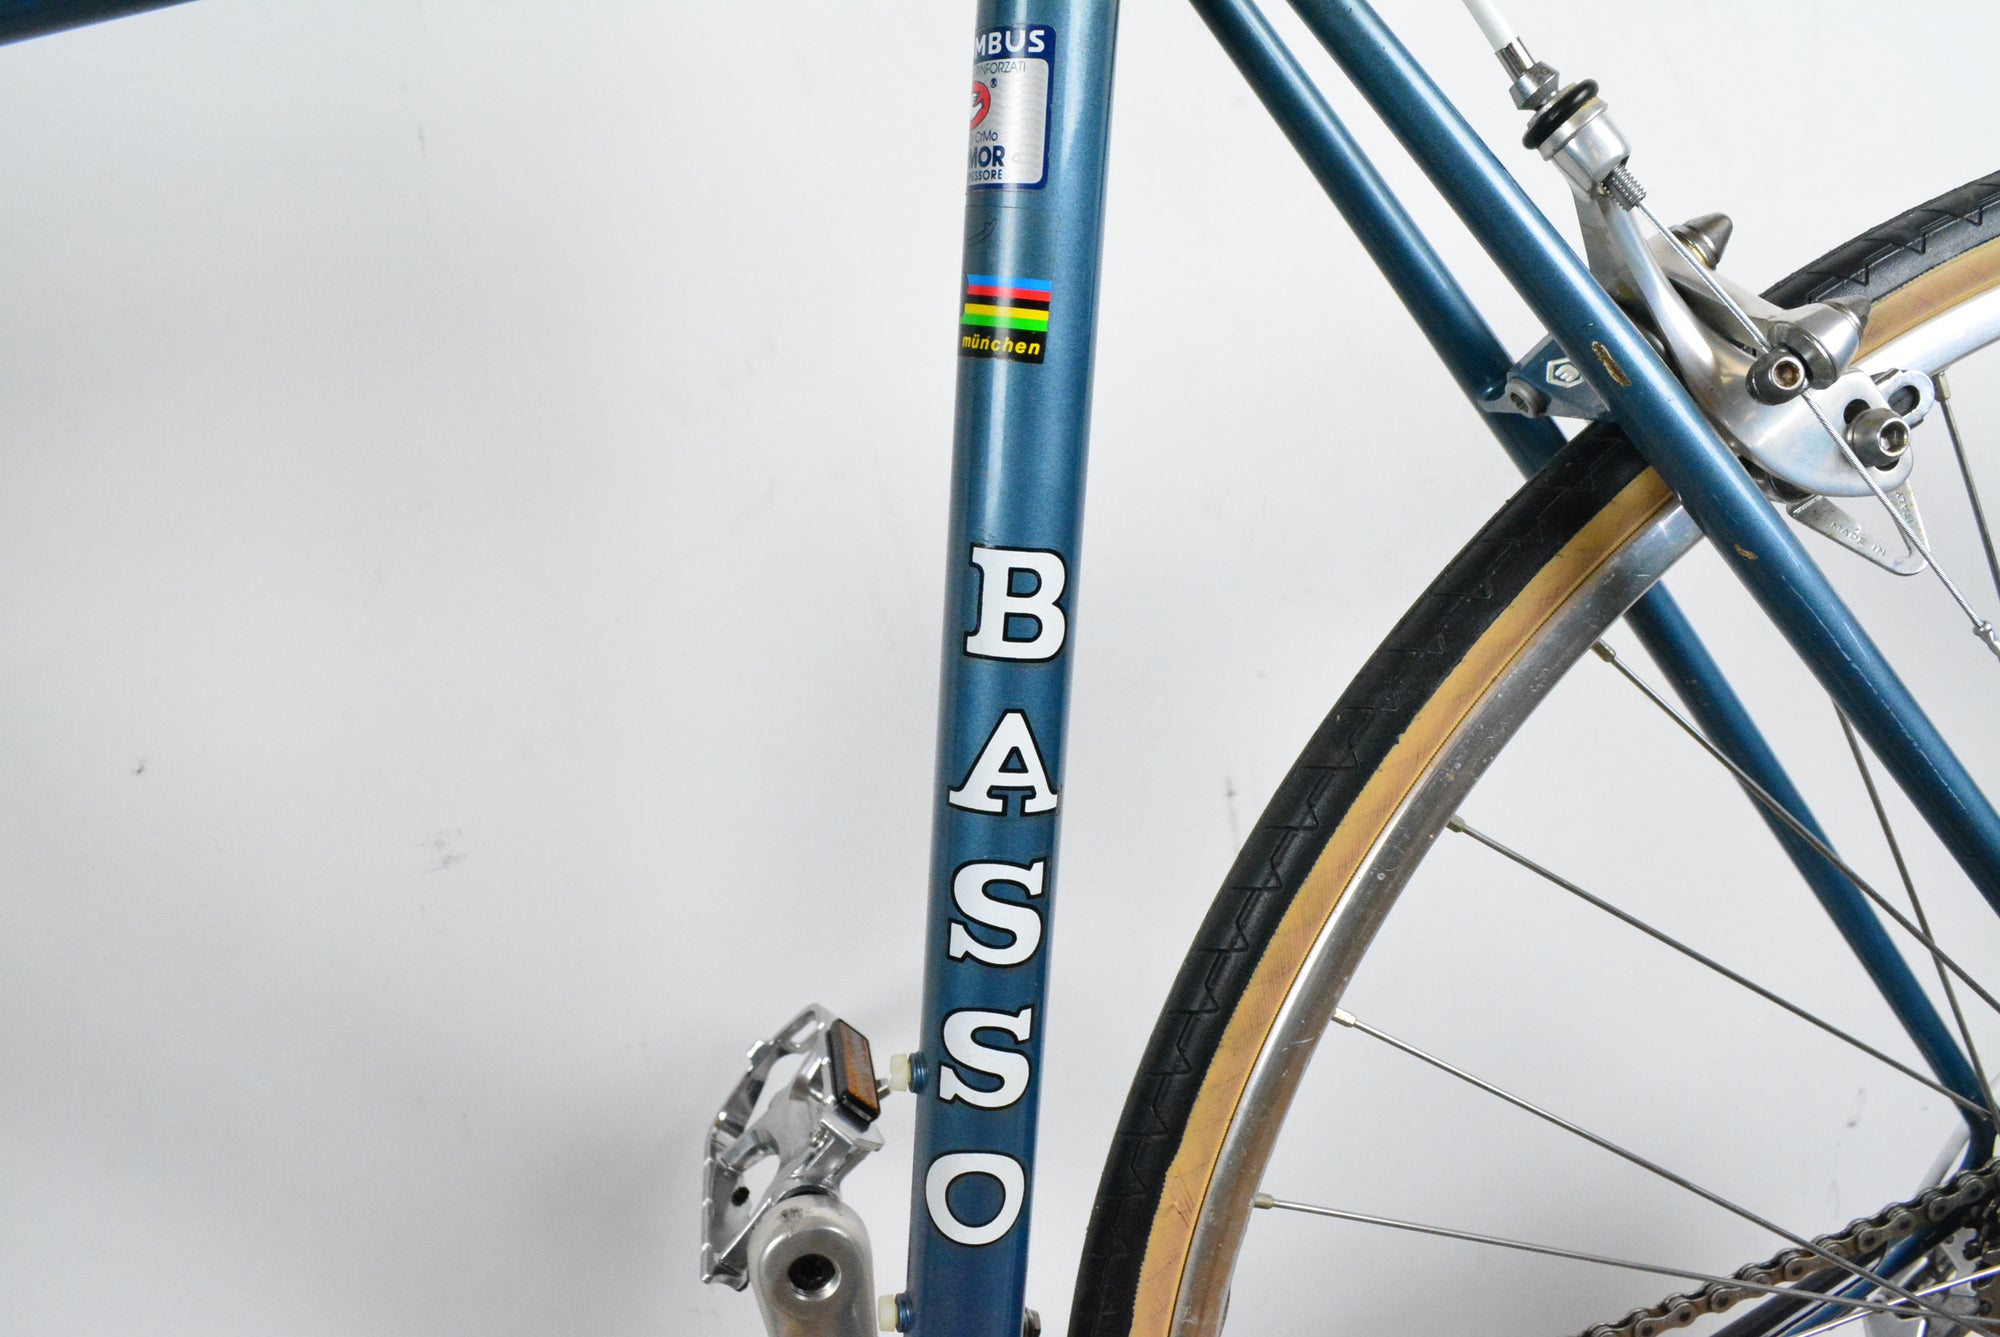 Basso Vintage Rennrad 54cm